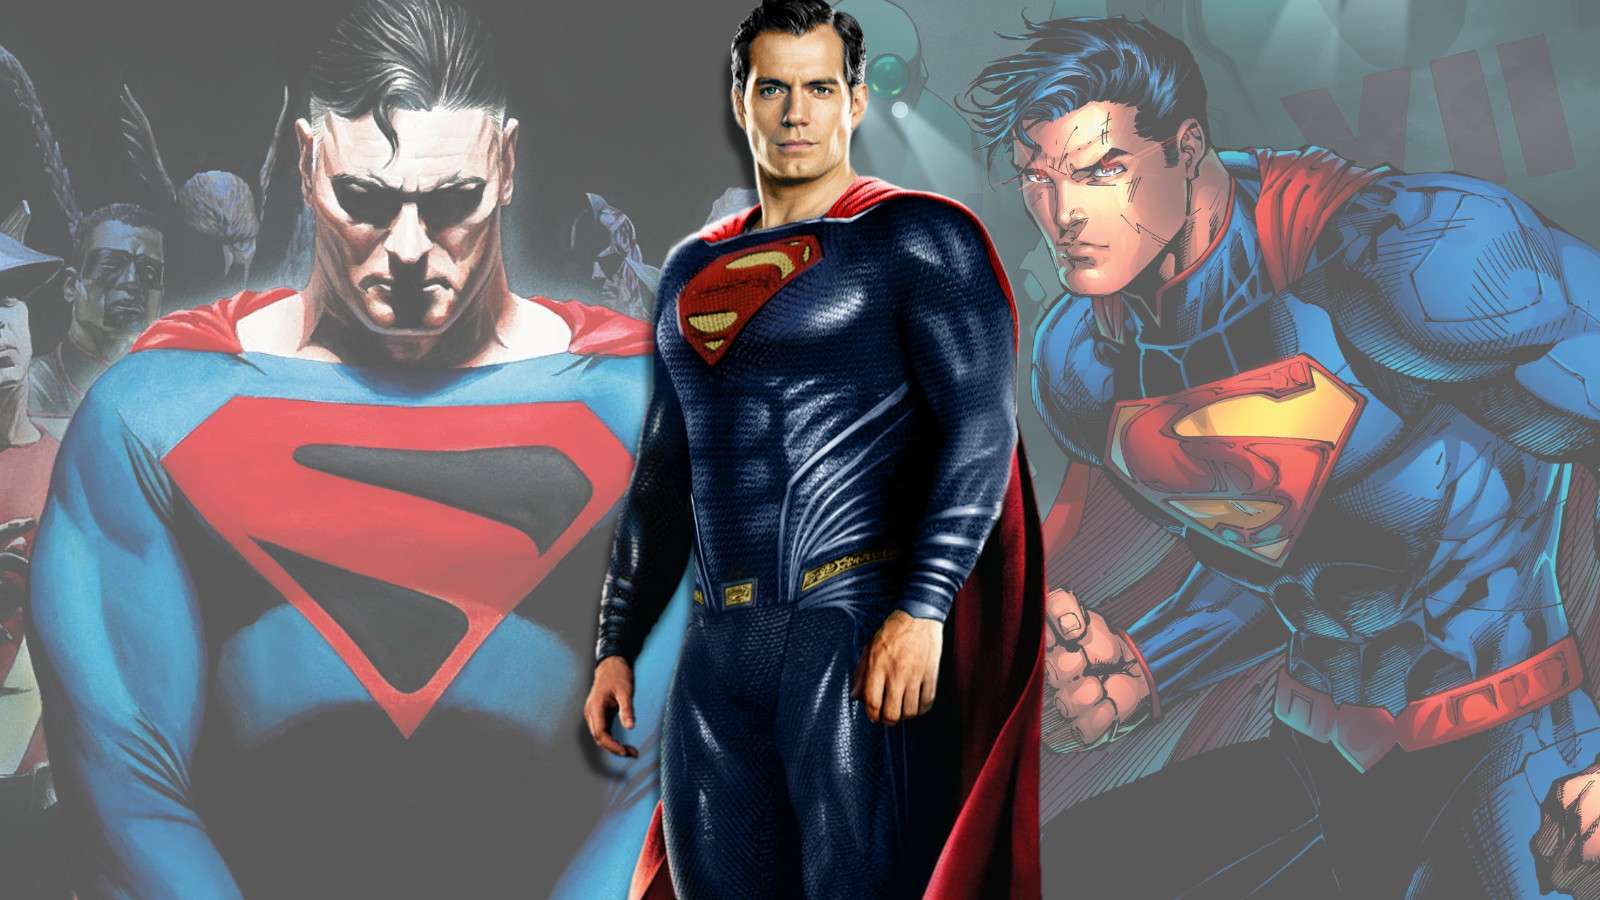 Henry Cavill as Superman, alongside Kingdom Come and New 52 Superman